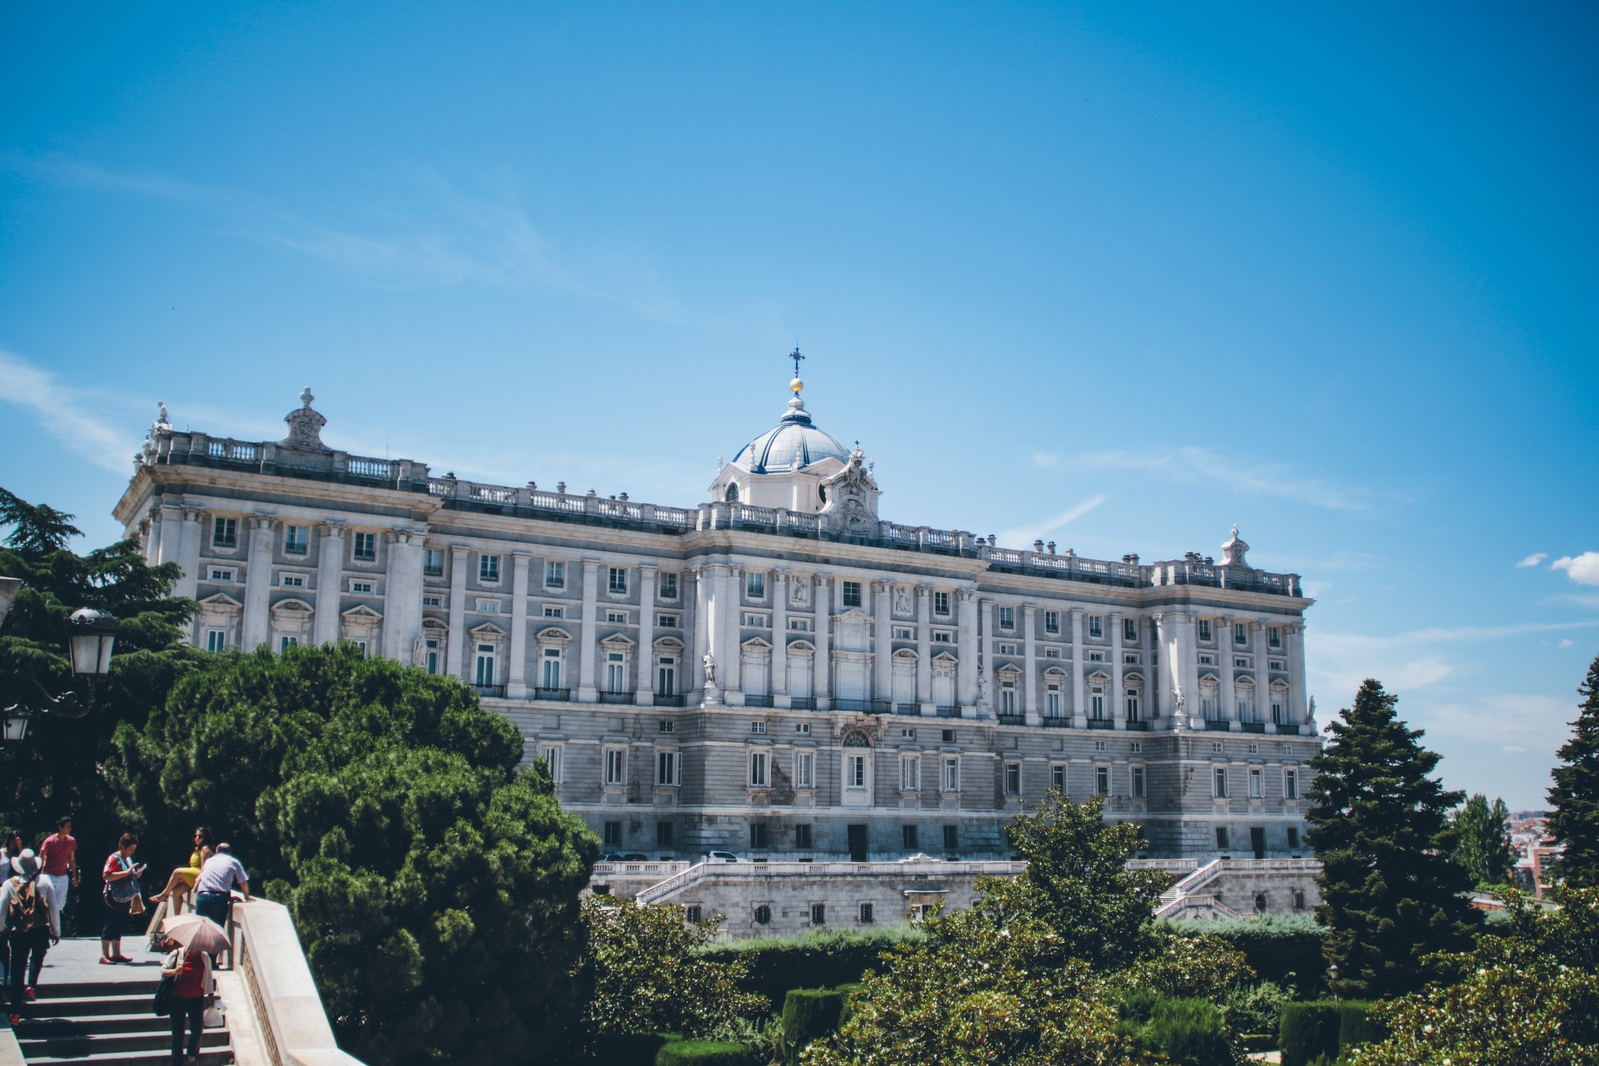 Image of Royal Palace from Sabatini Gardens by Team PhotoHound